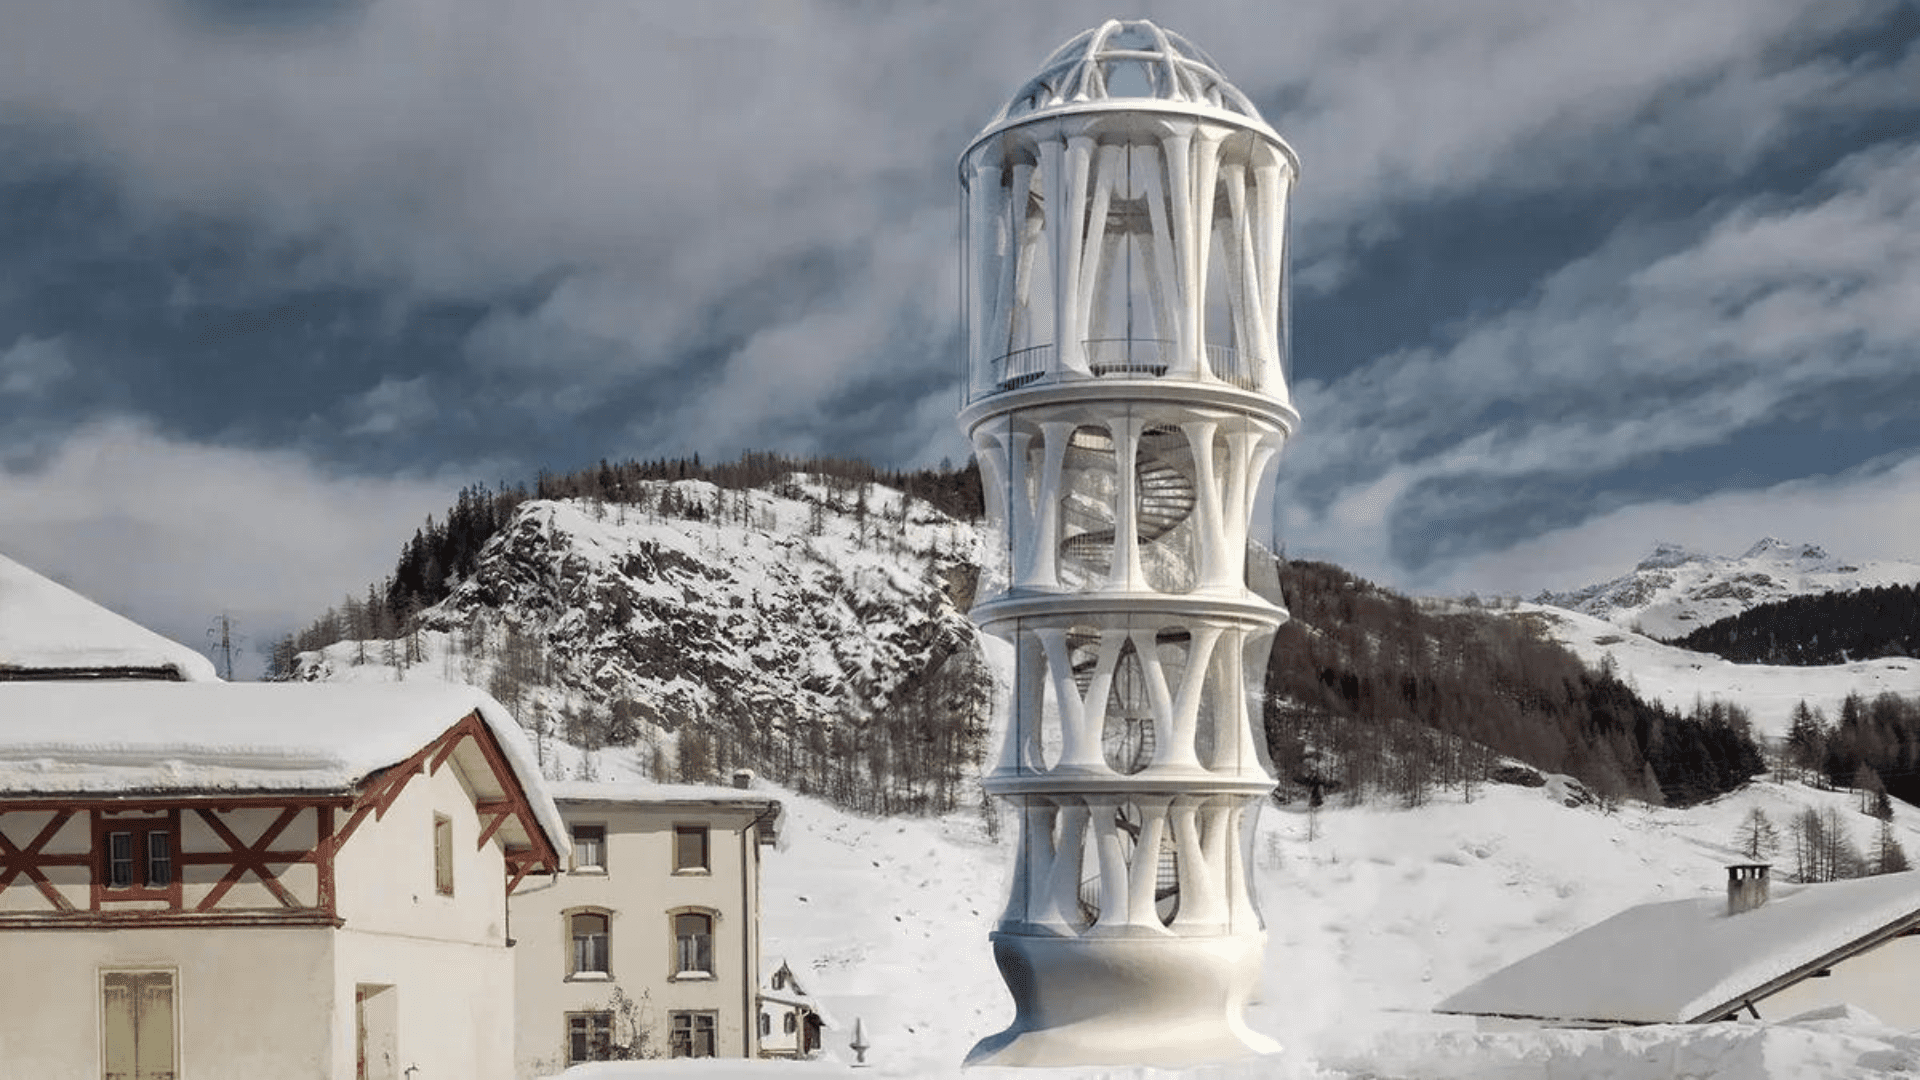 3D printed tower